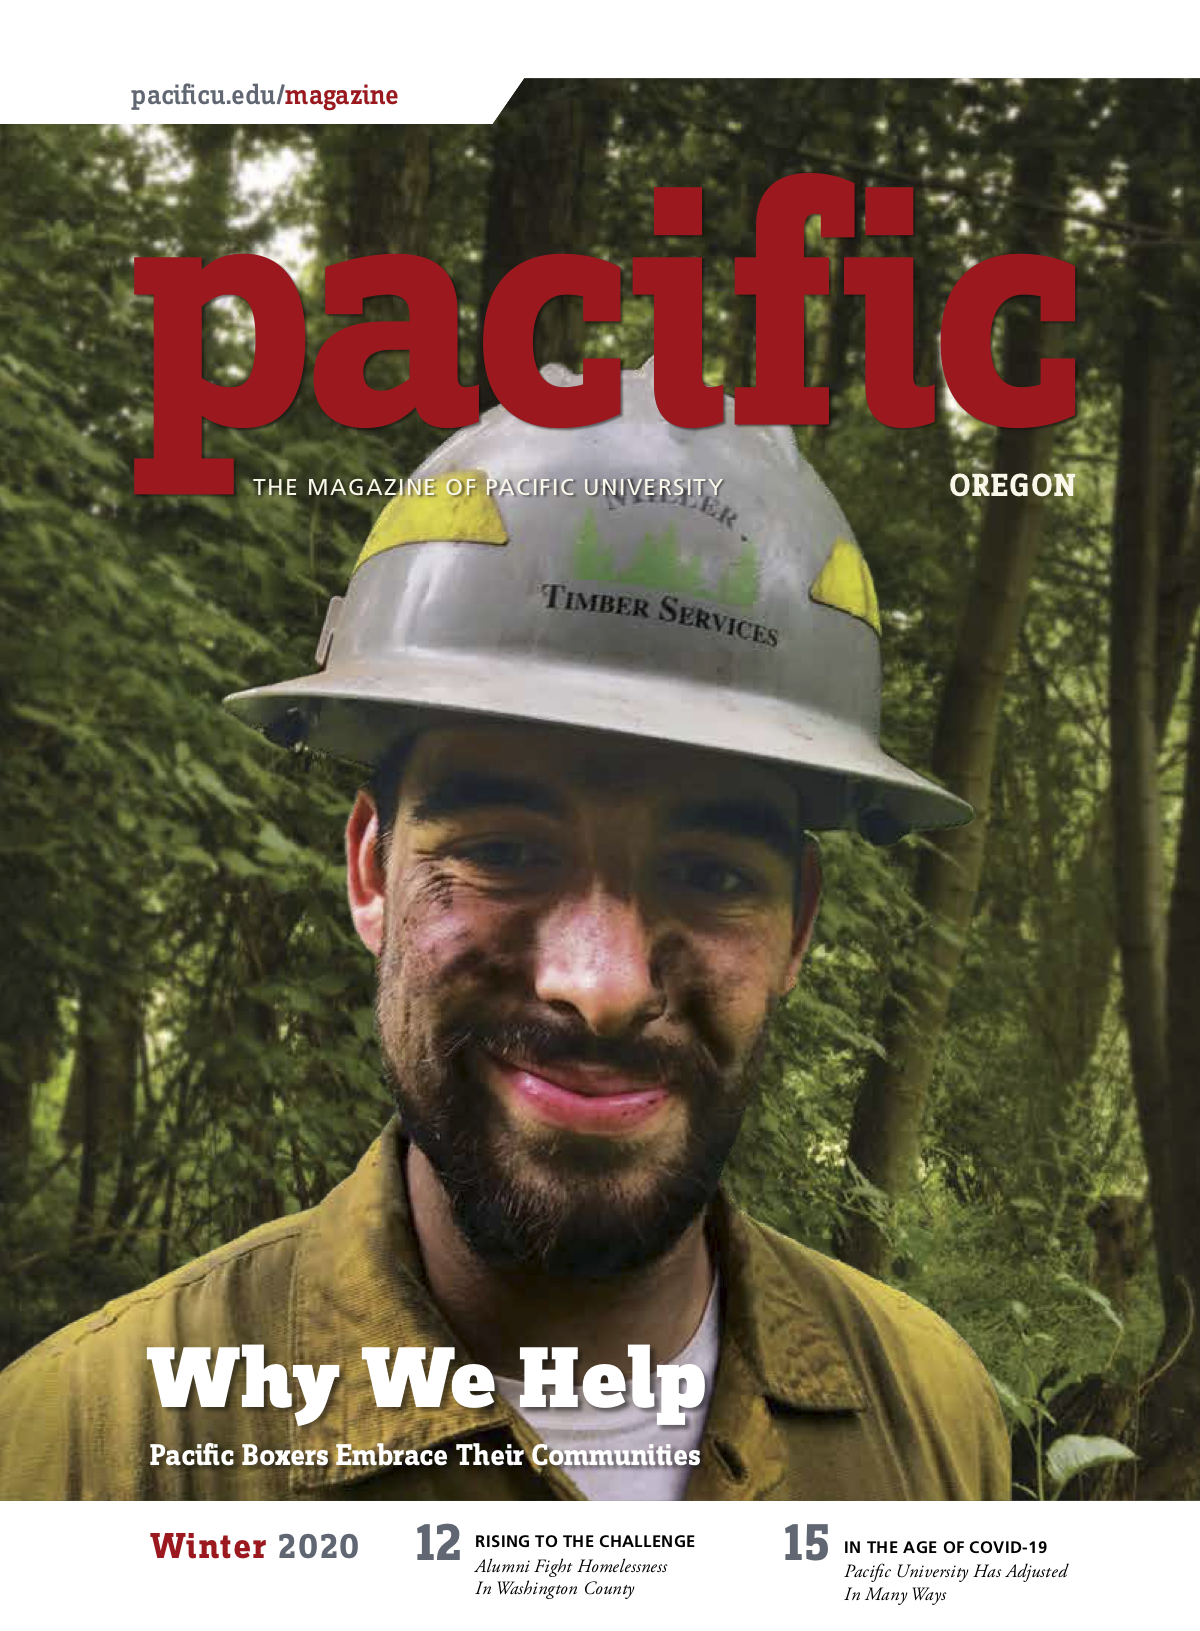 Cover of Winter 2020 Pacific magazine